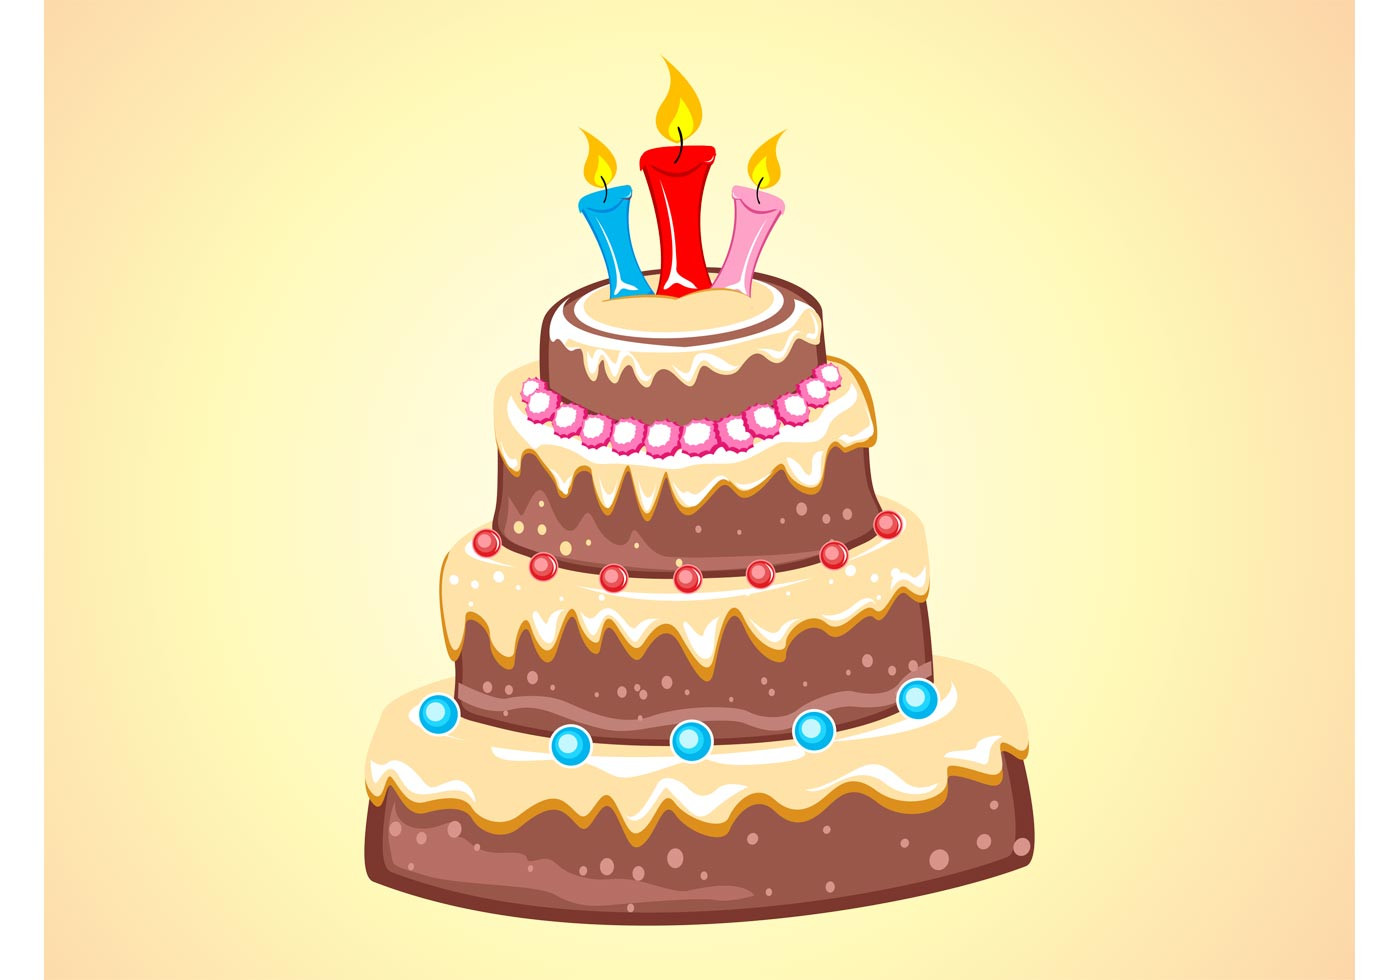 Birthday Cake Vector
 Chocolate Cake Download Free Vector Art Stock Graphics